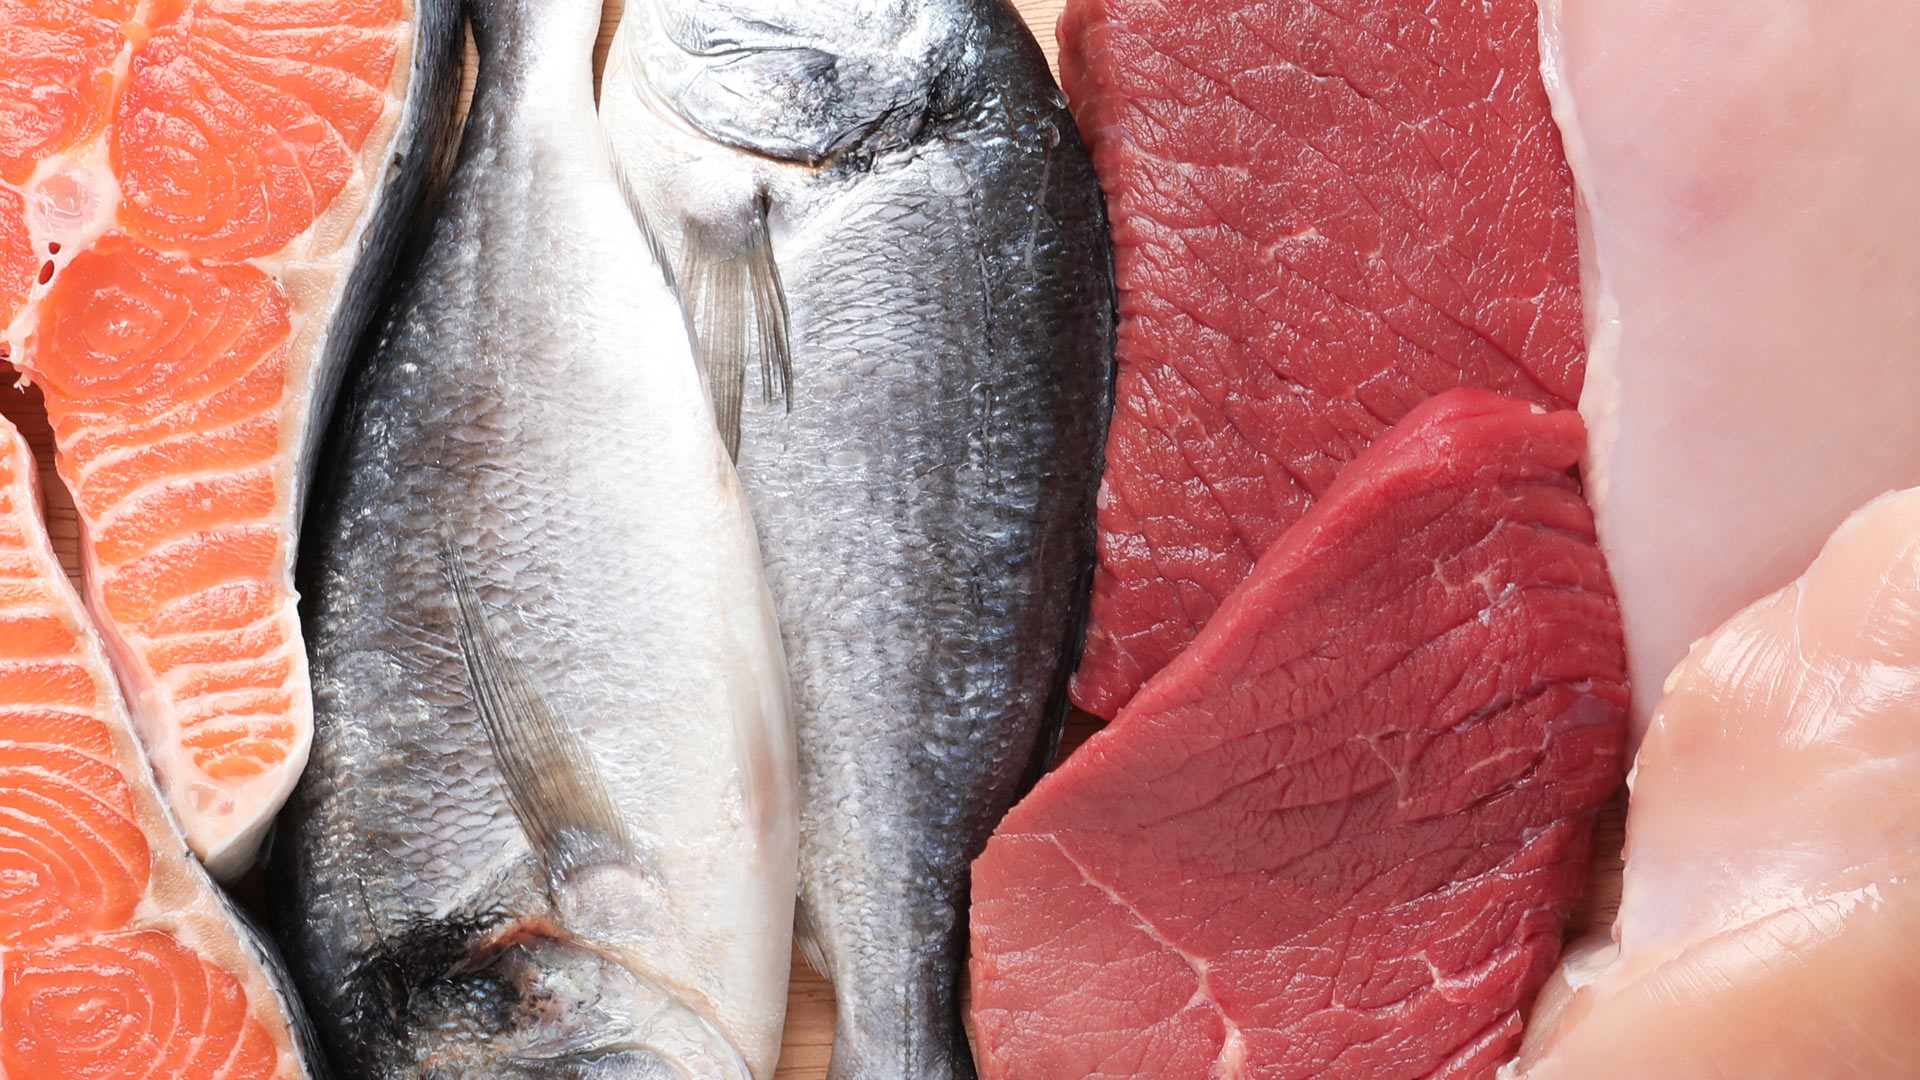 https://www.foodunfolded.com/media/images/top-banner-meatfish.jpg